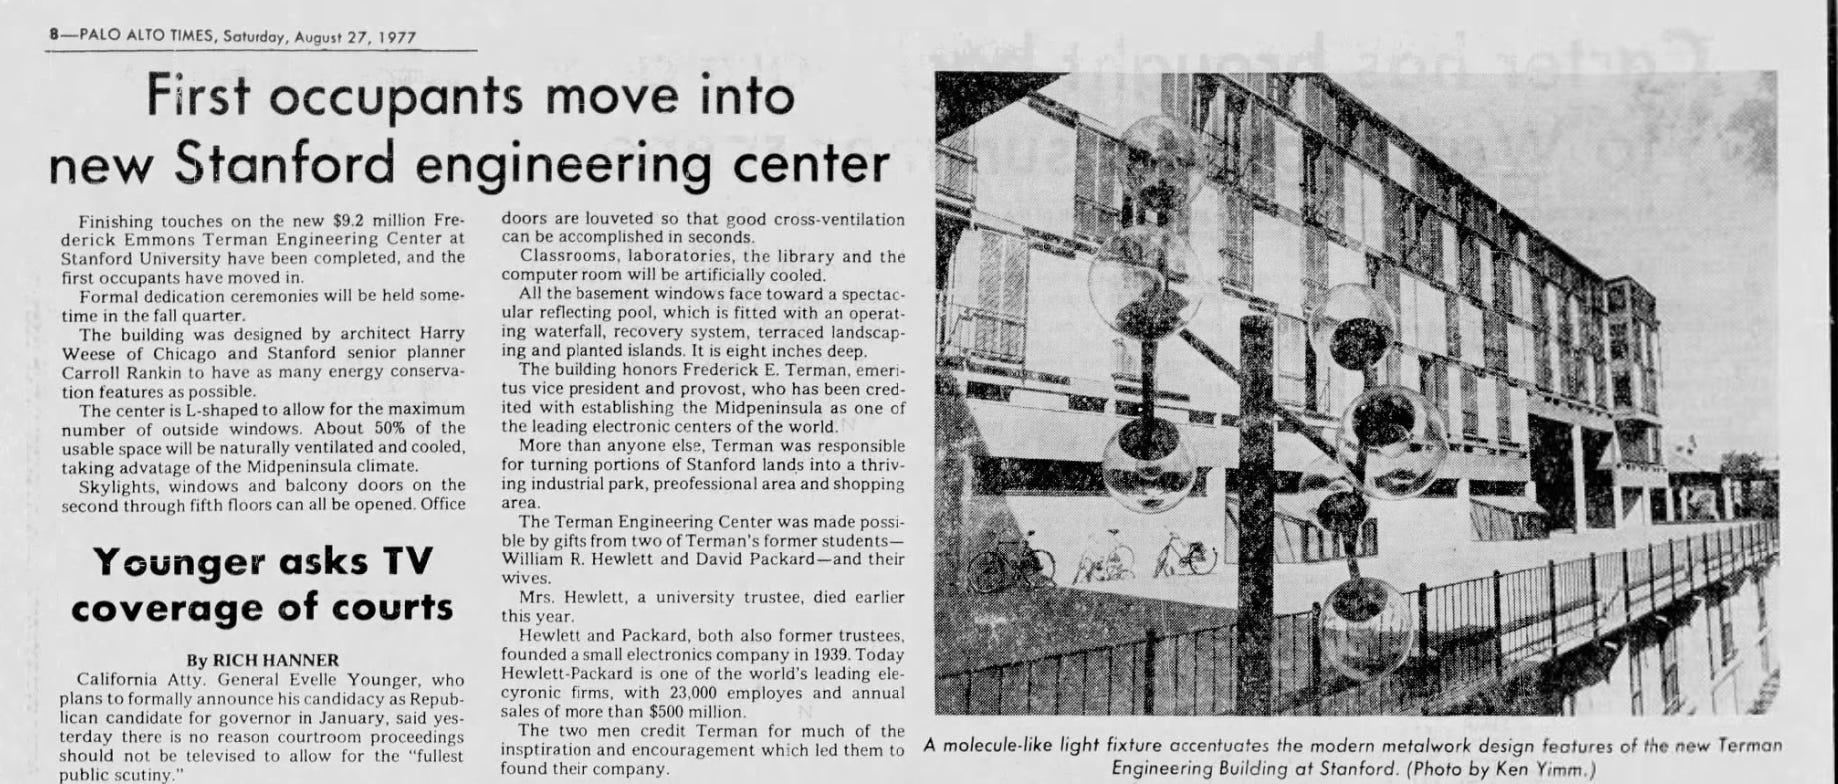 Screenshot of a news article about Hewlett and Packard funding an engineering school